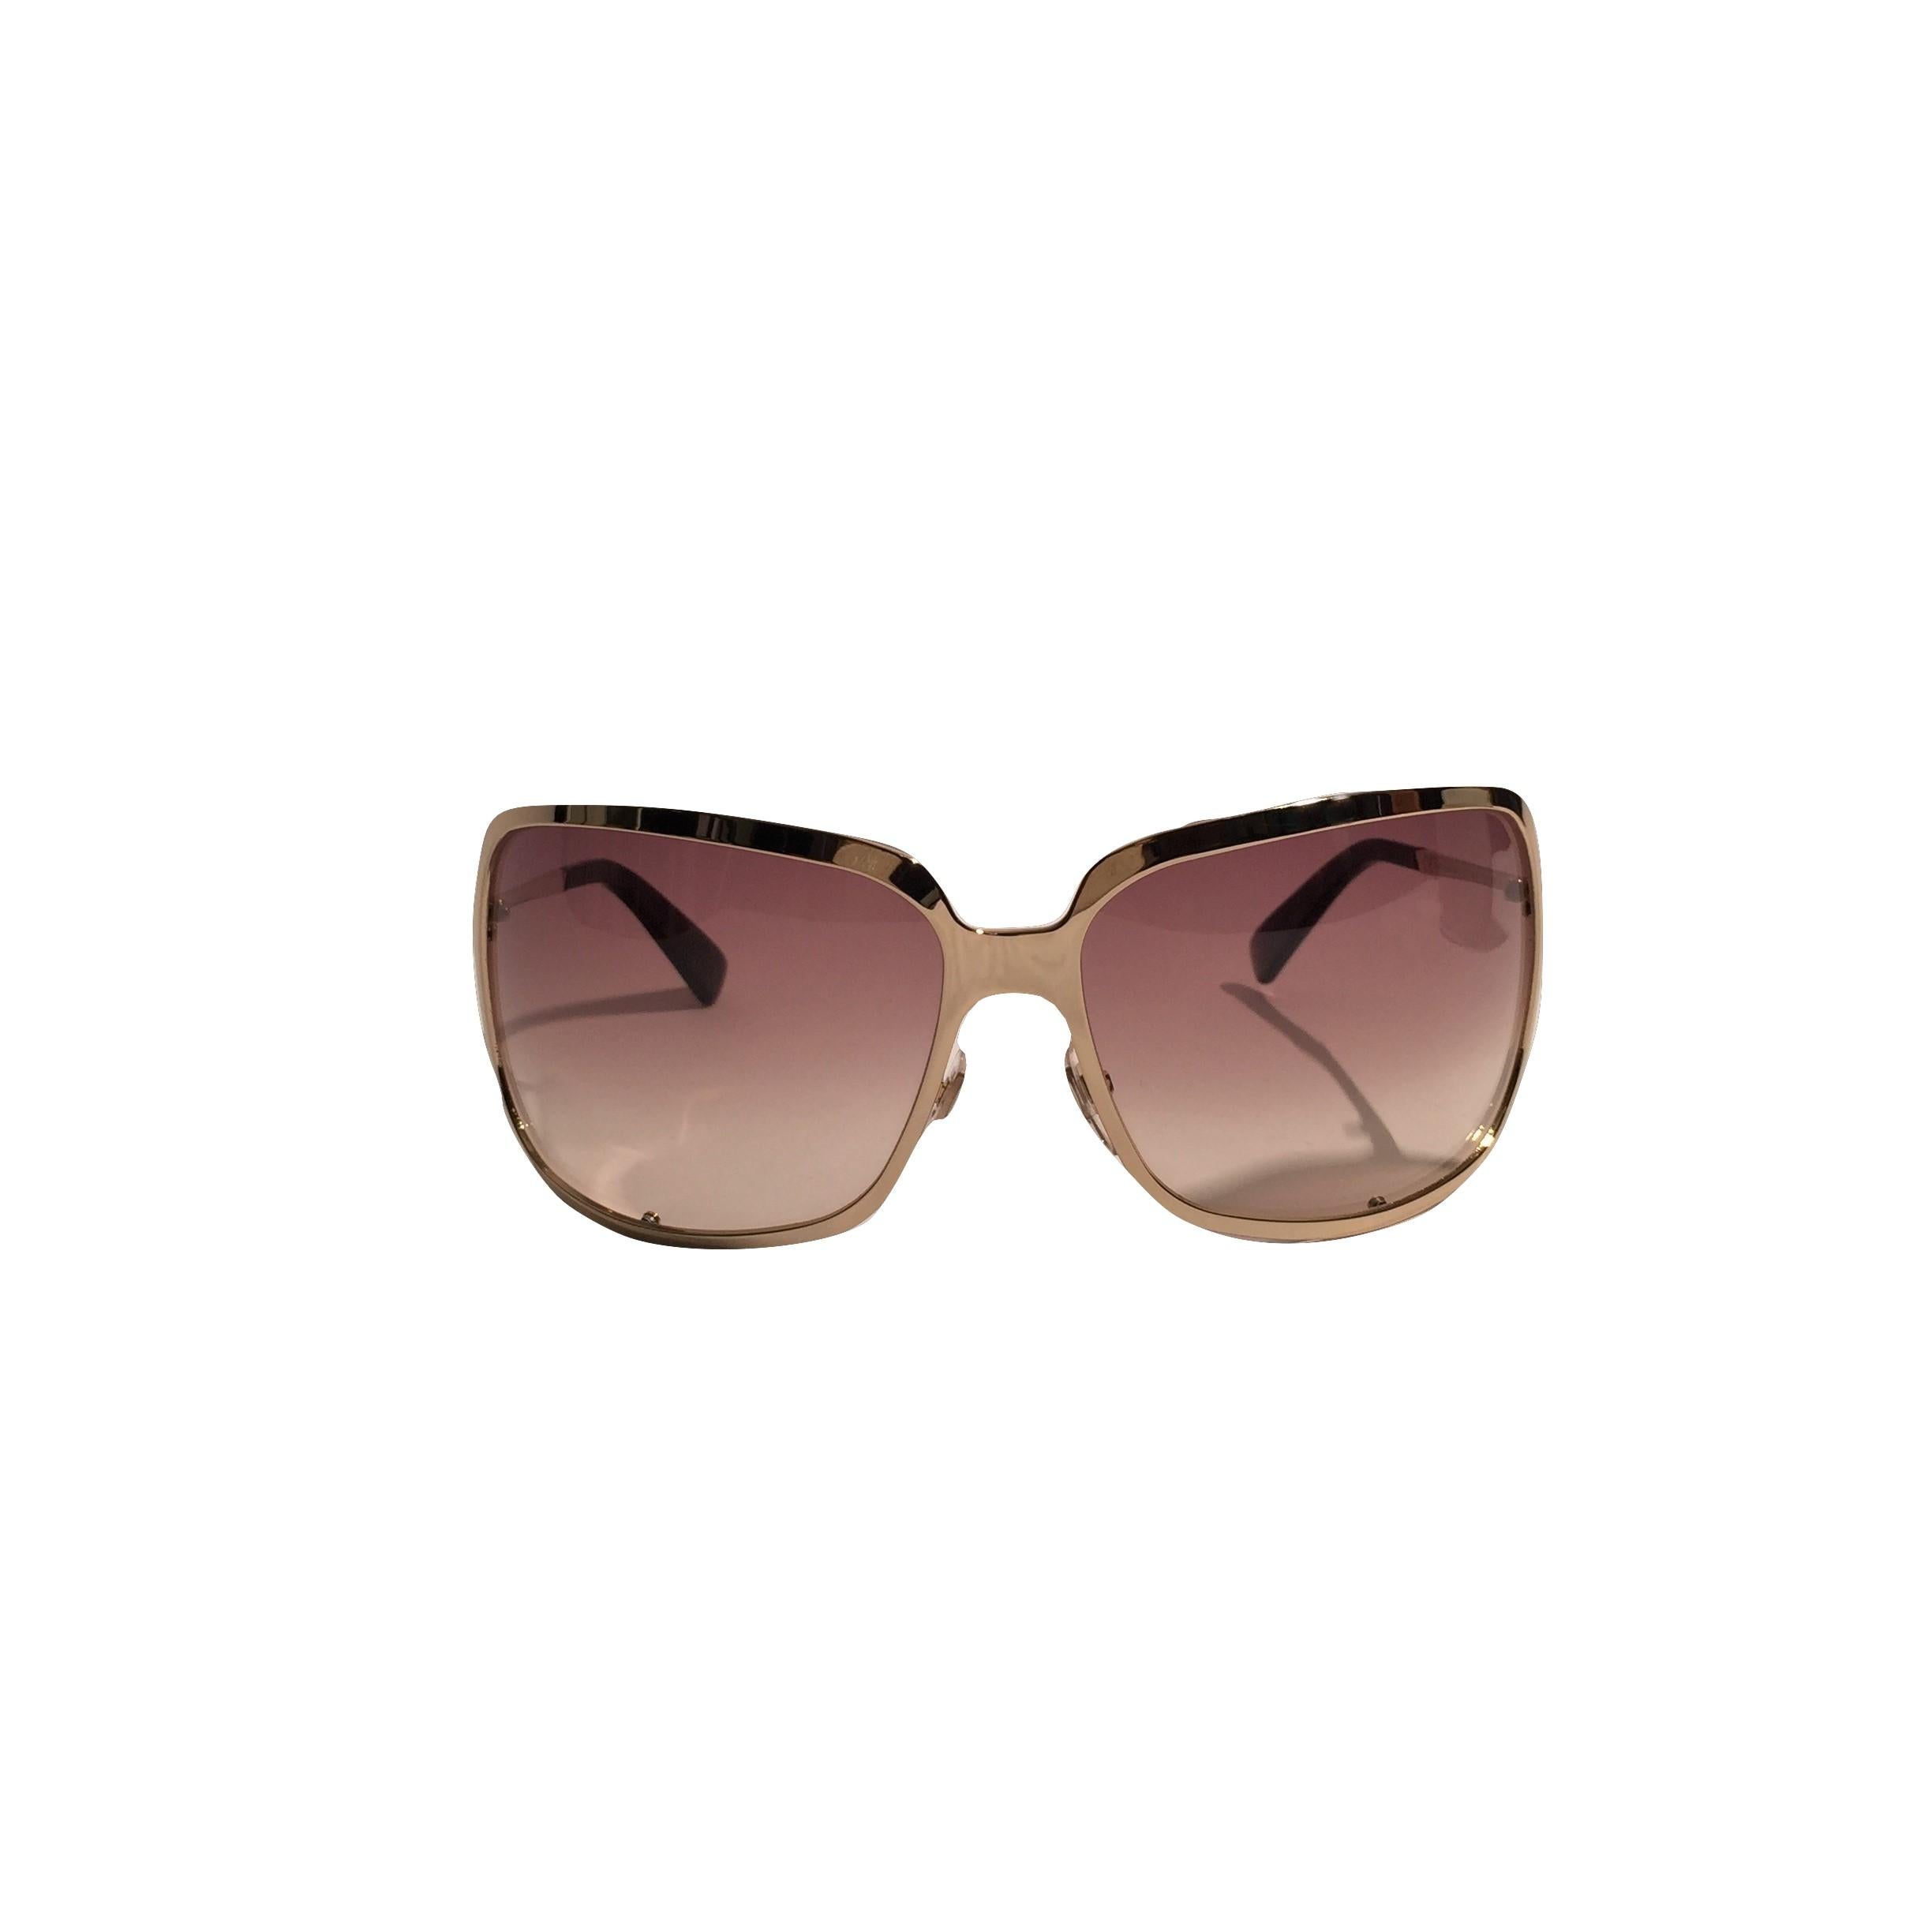 New Yves Saint Laurent YSL Gold Wrap Sunglasses W/ Case 4